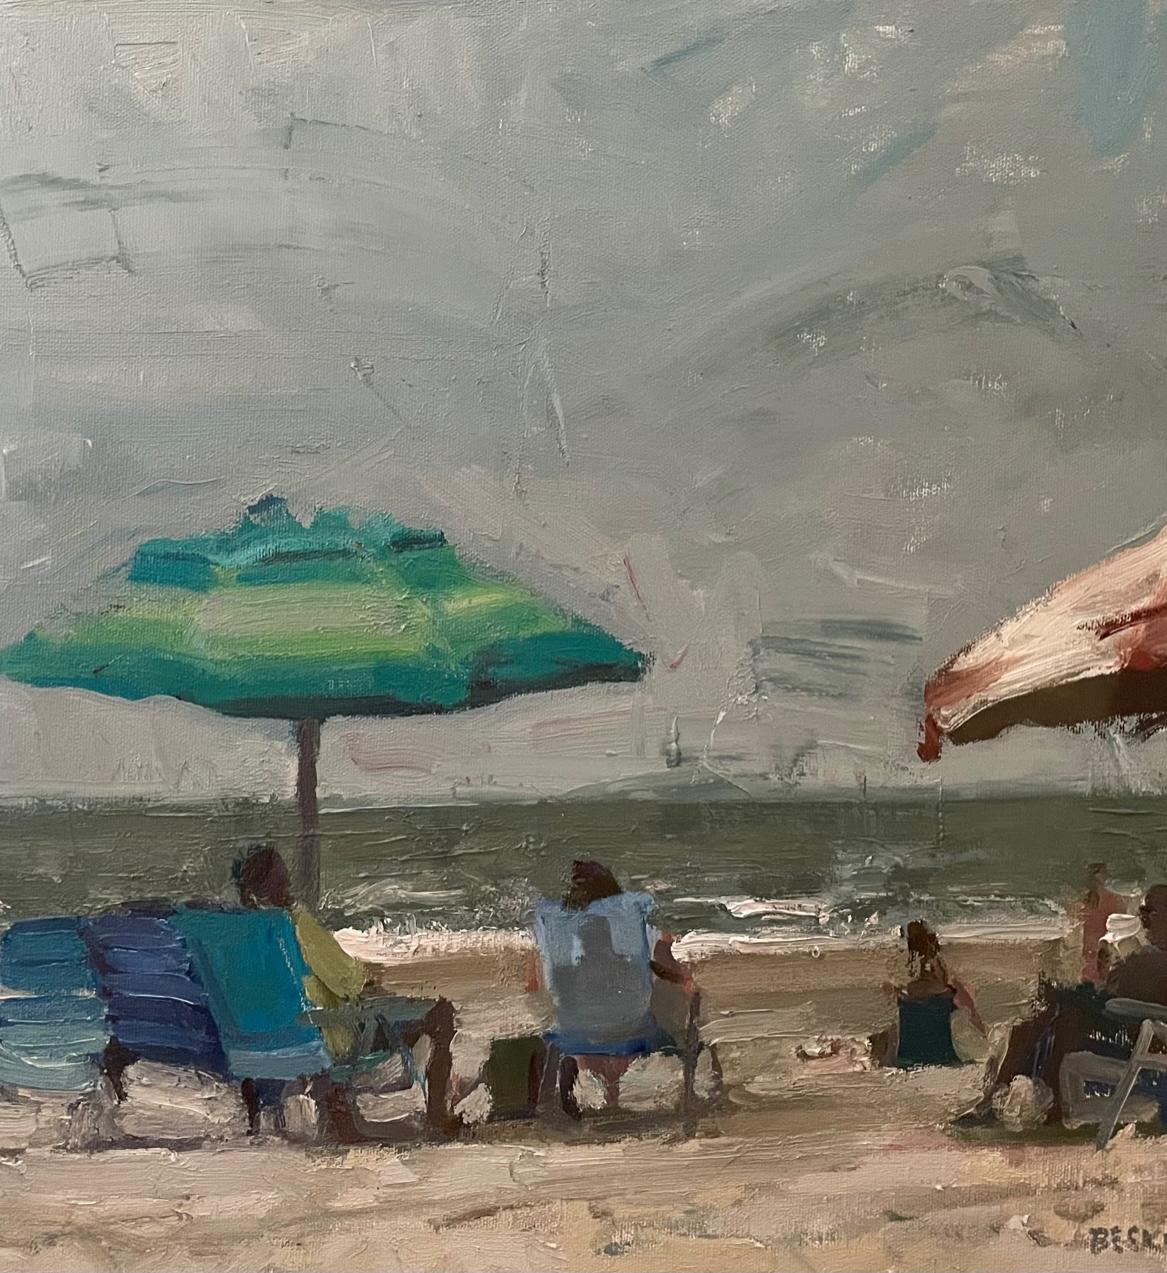 DANA BEACH IN GRAYS Oil on Panel,  Impressionism 18x24,  CA Beaches Figurative - American Impressionist Painting by Jim Beckner